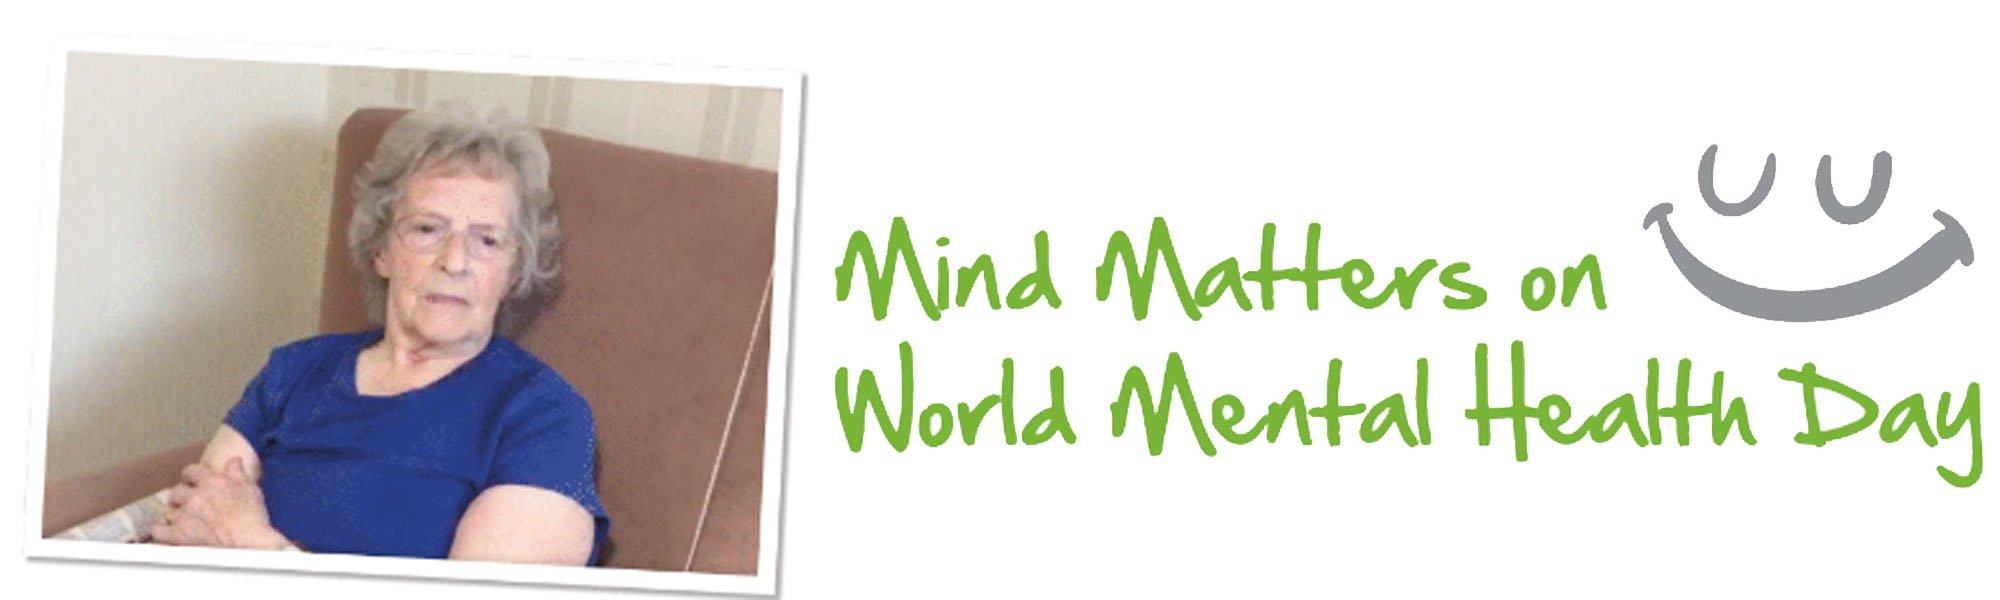 Mind Matters on World Mental Health Day web banner